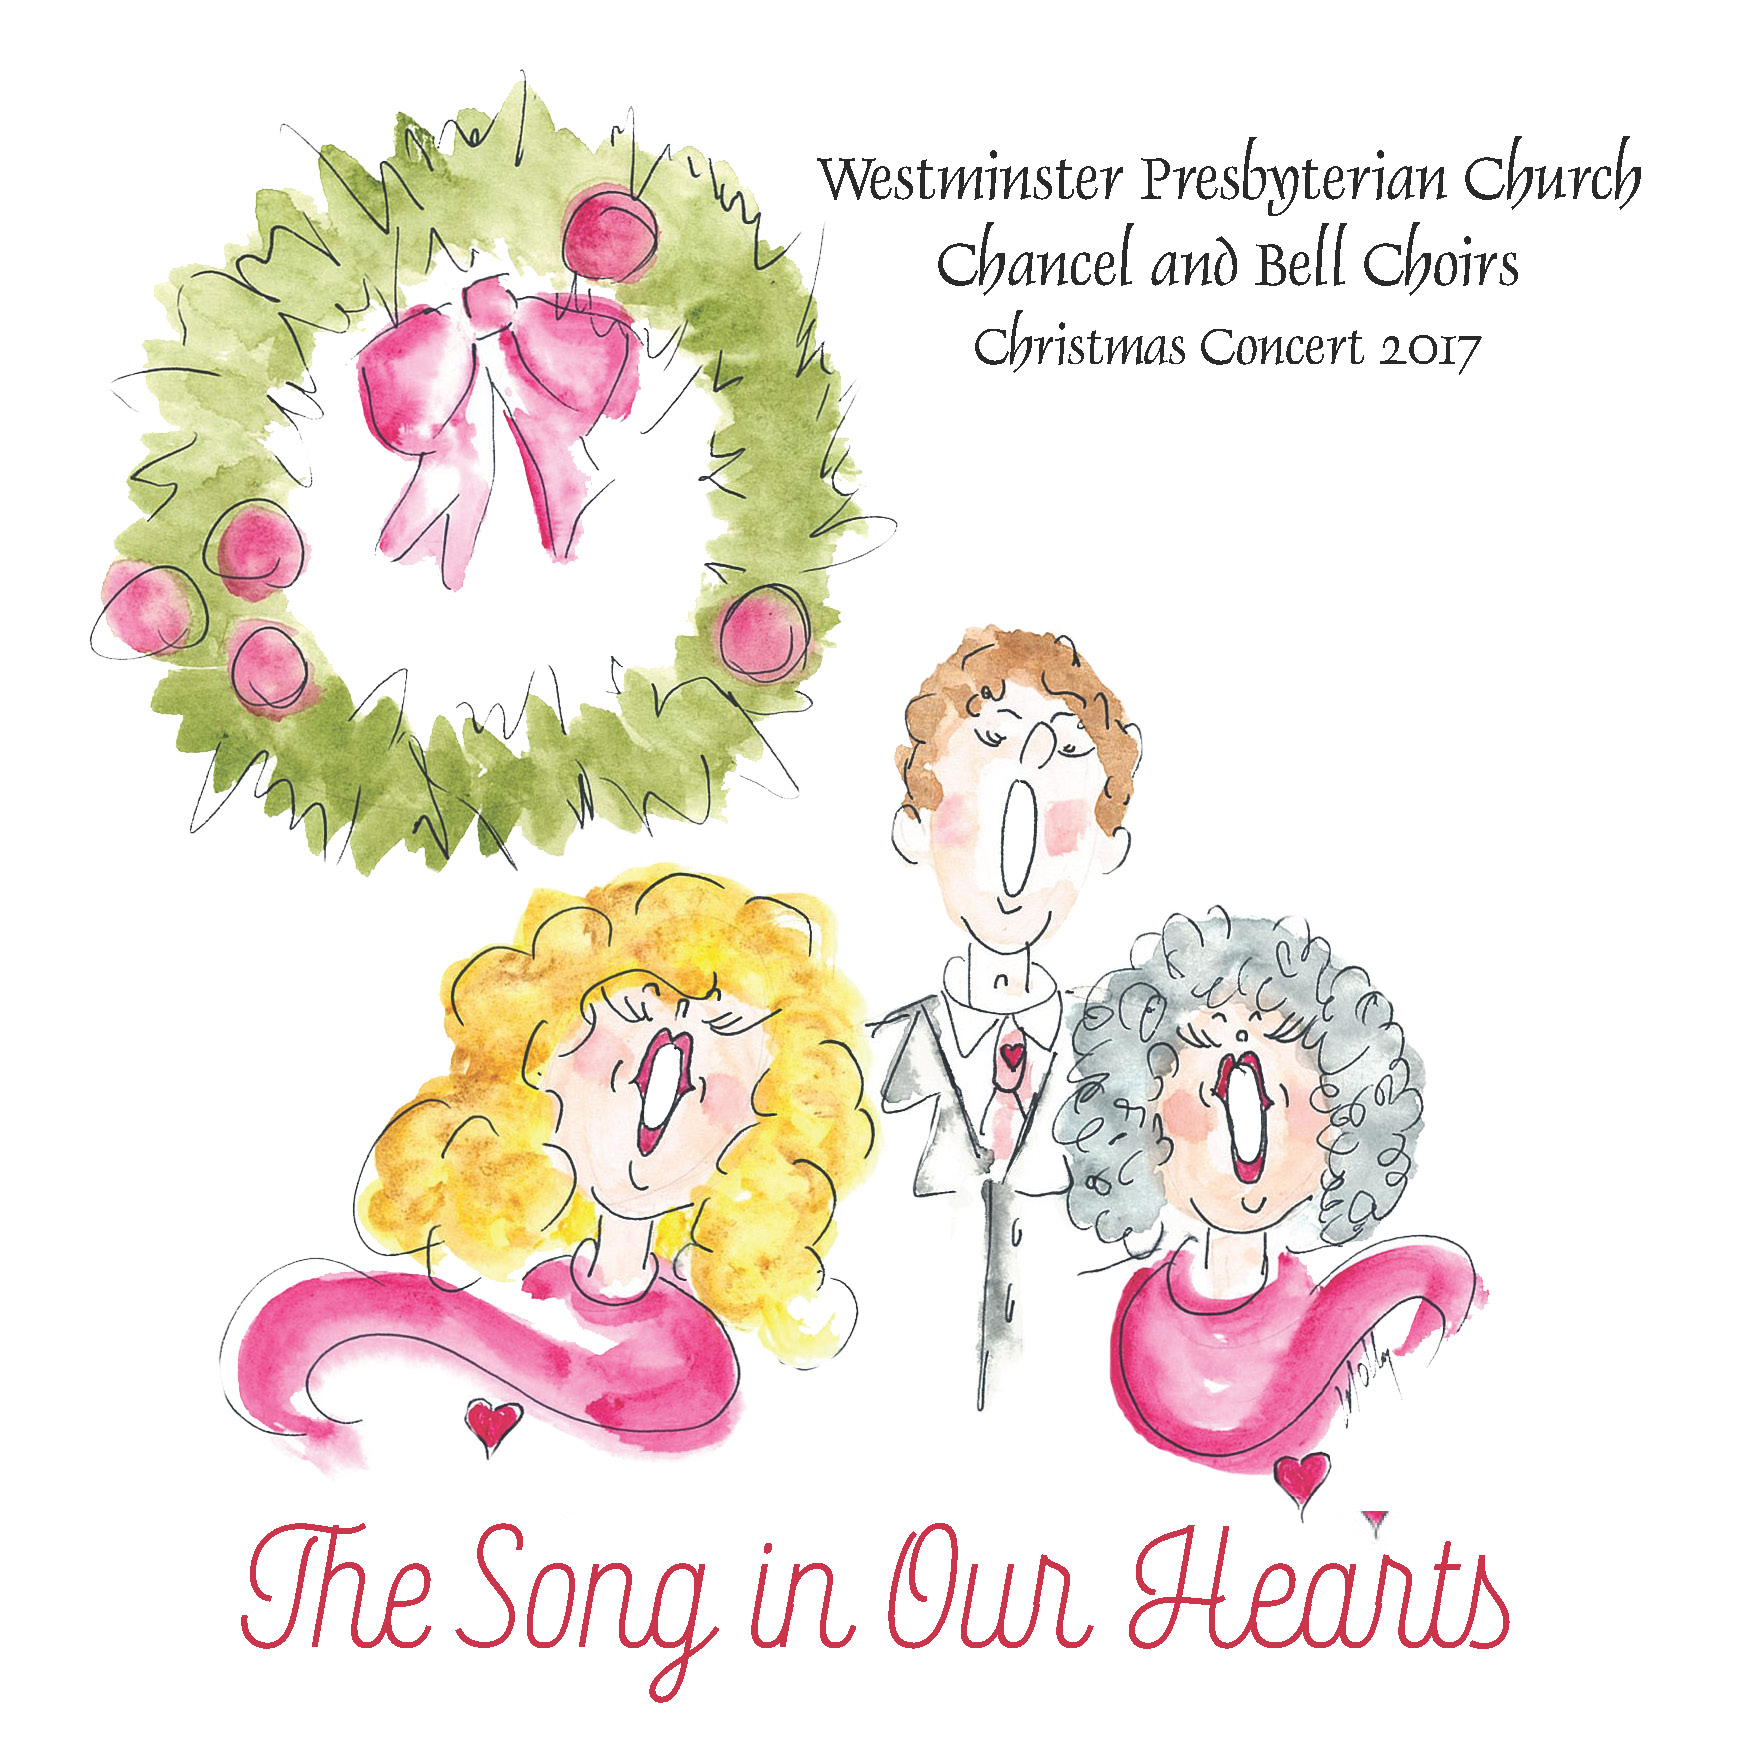 Westminster Presbyterian Church Choir “The Song in Our Hearts”